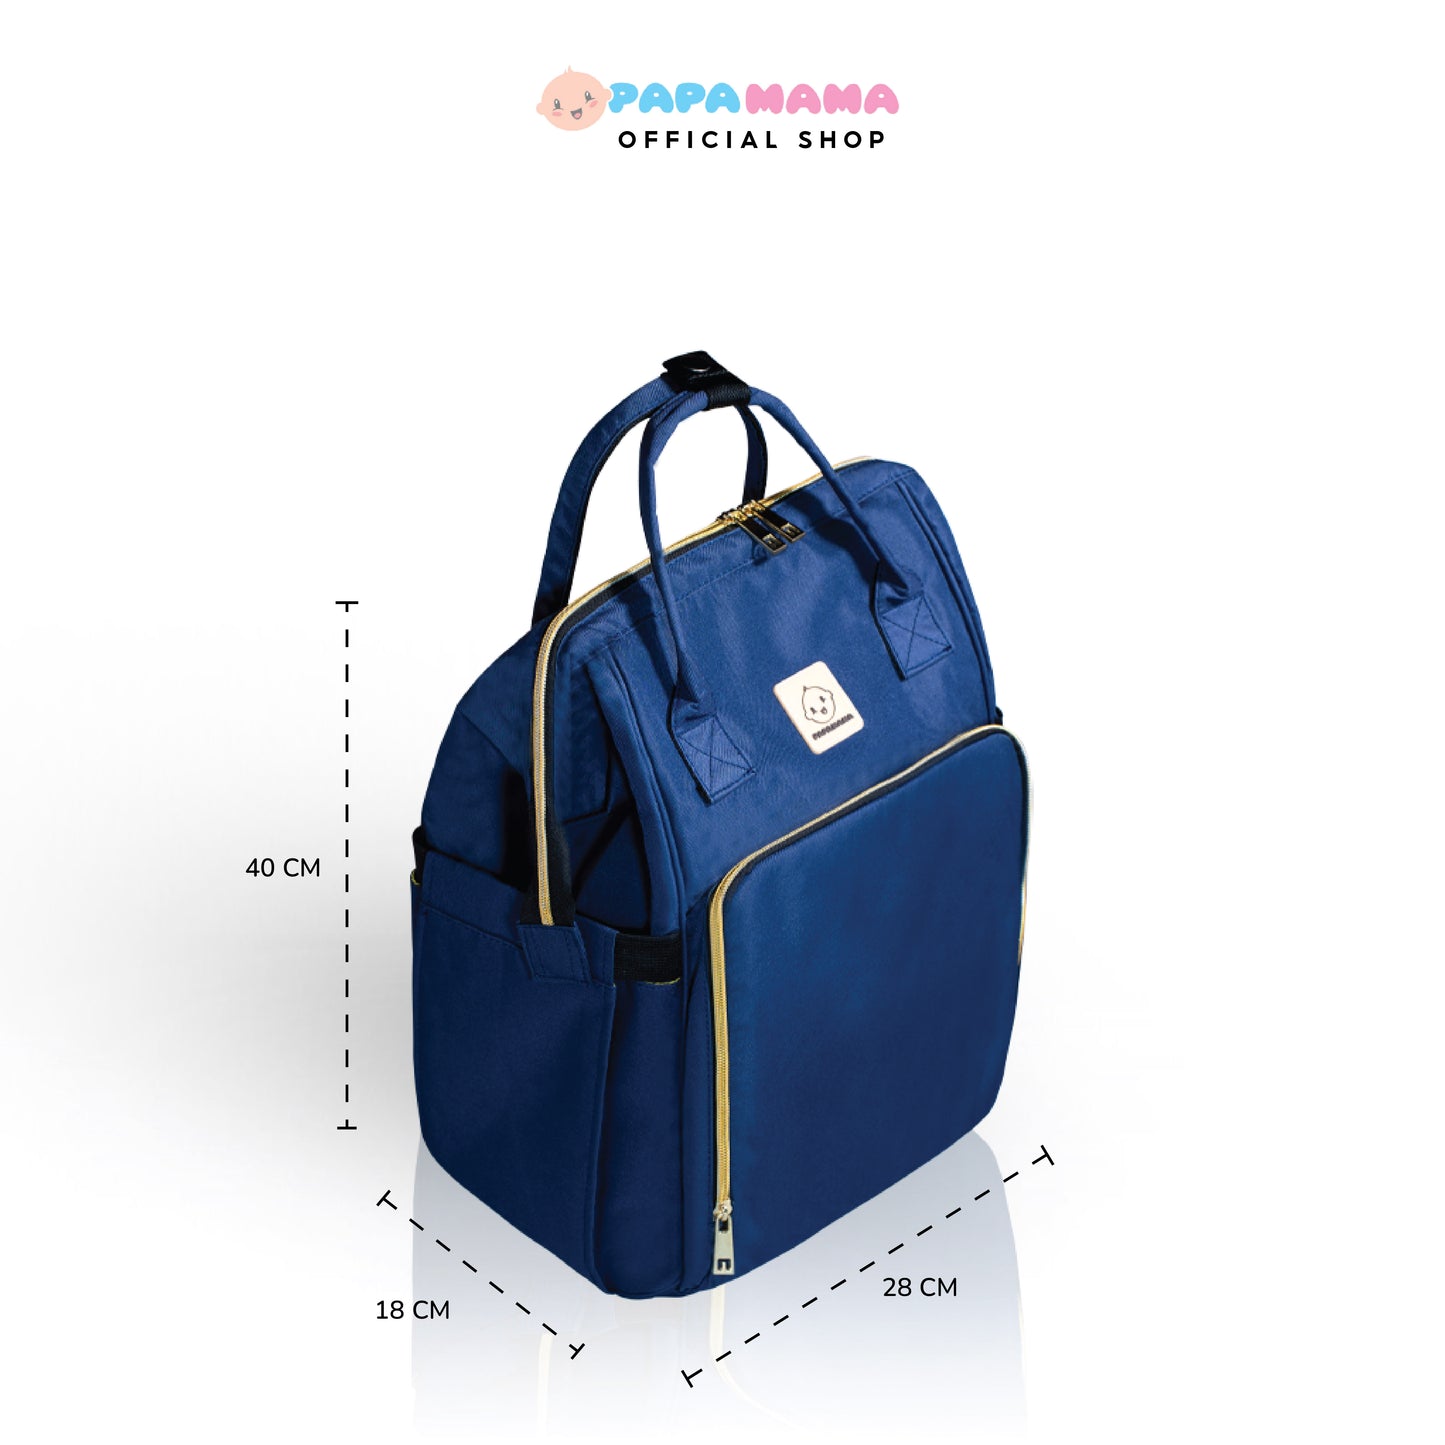 Papamama Basic Diaper Bag - 1003